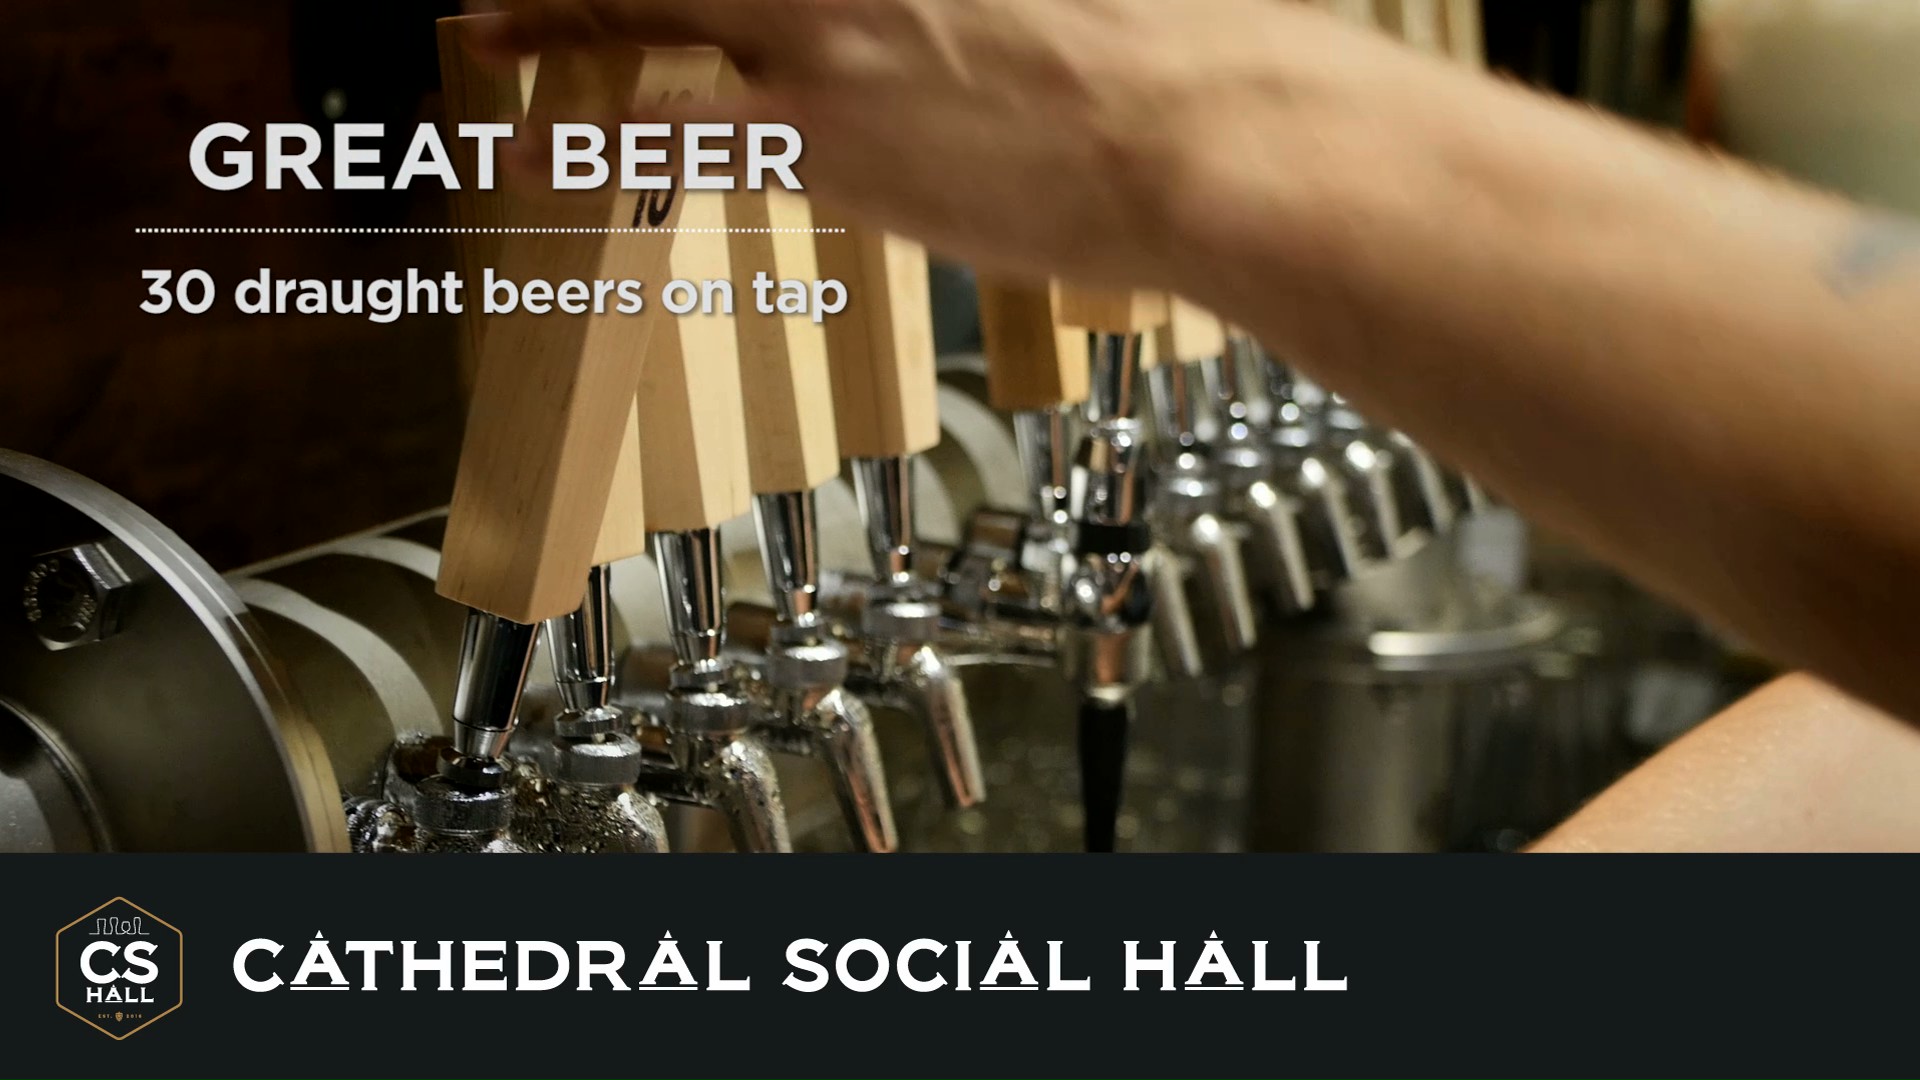 Cathedral Social Hall, Social, Cathedral Social Hall - Team - Mike, Portfolio Image, Great Beer. 30 Draught Beers on Tap.